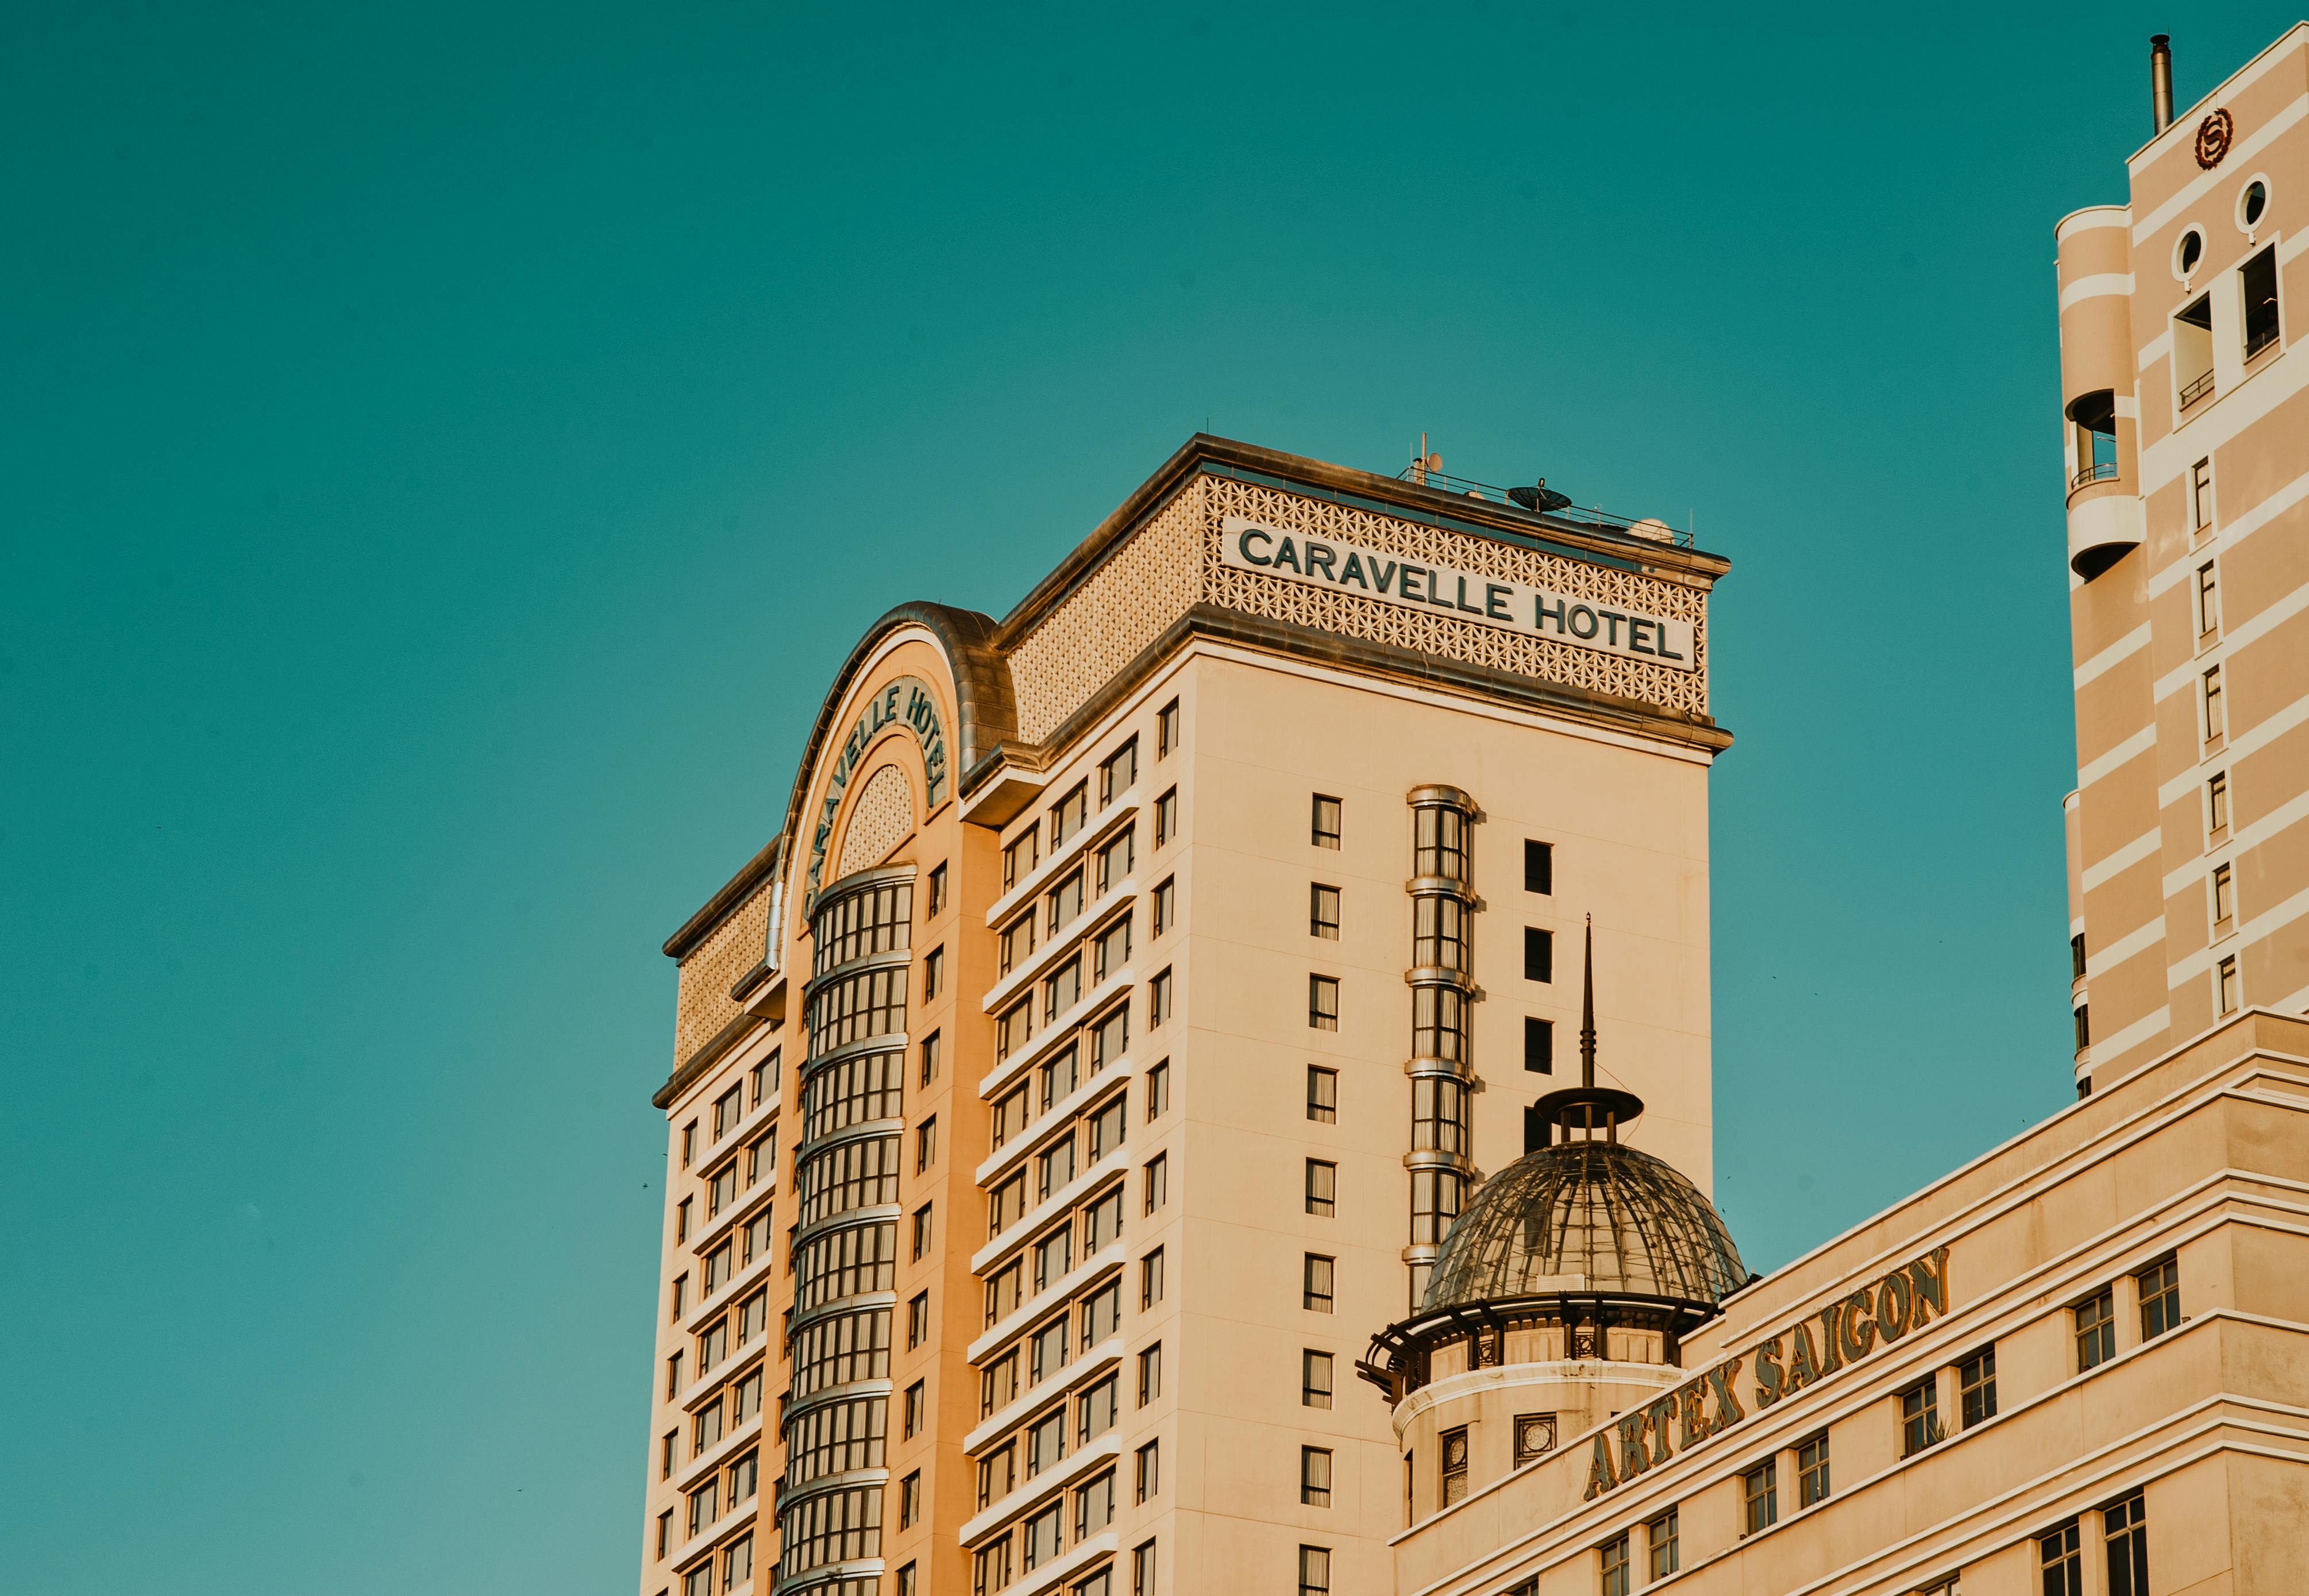 Caravelle Hotel \u00b7 Free Stock Photo